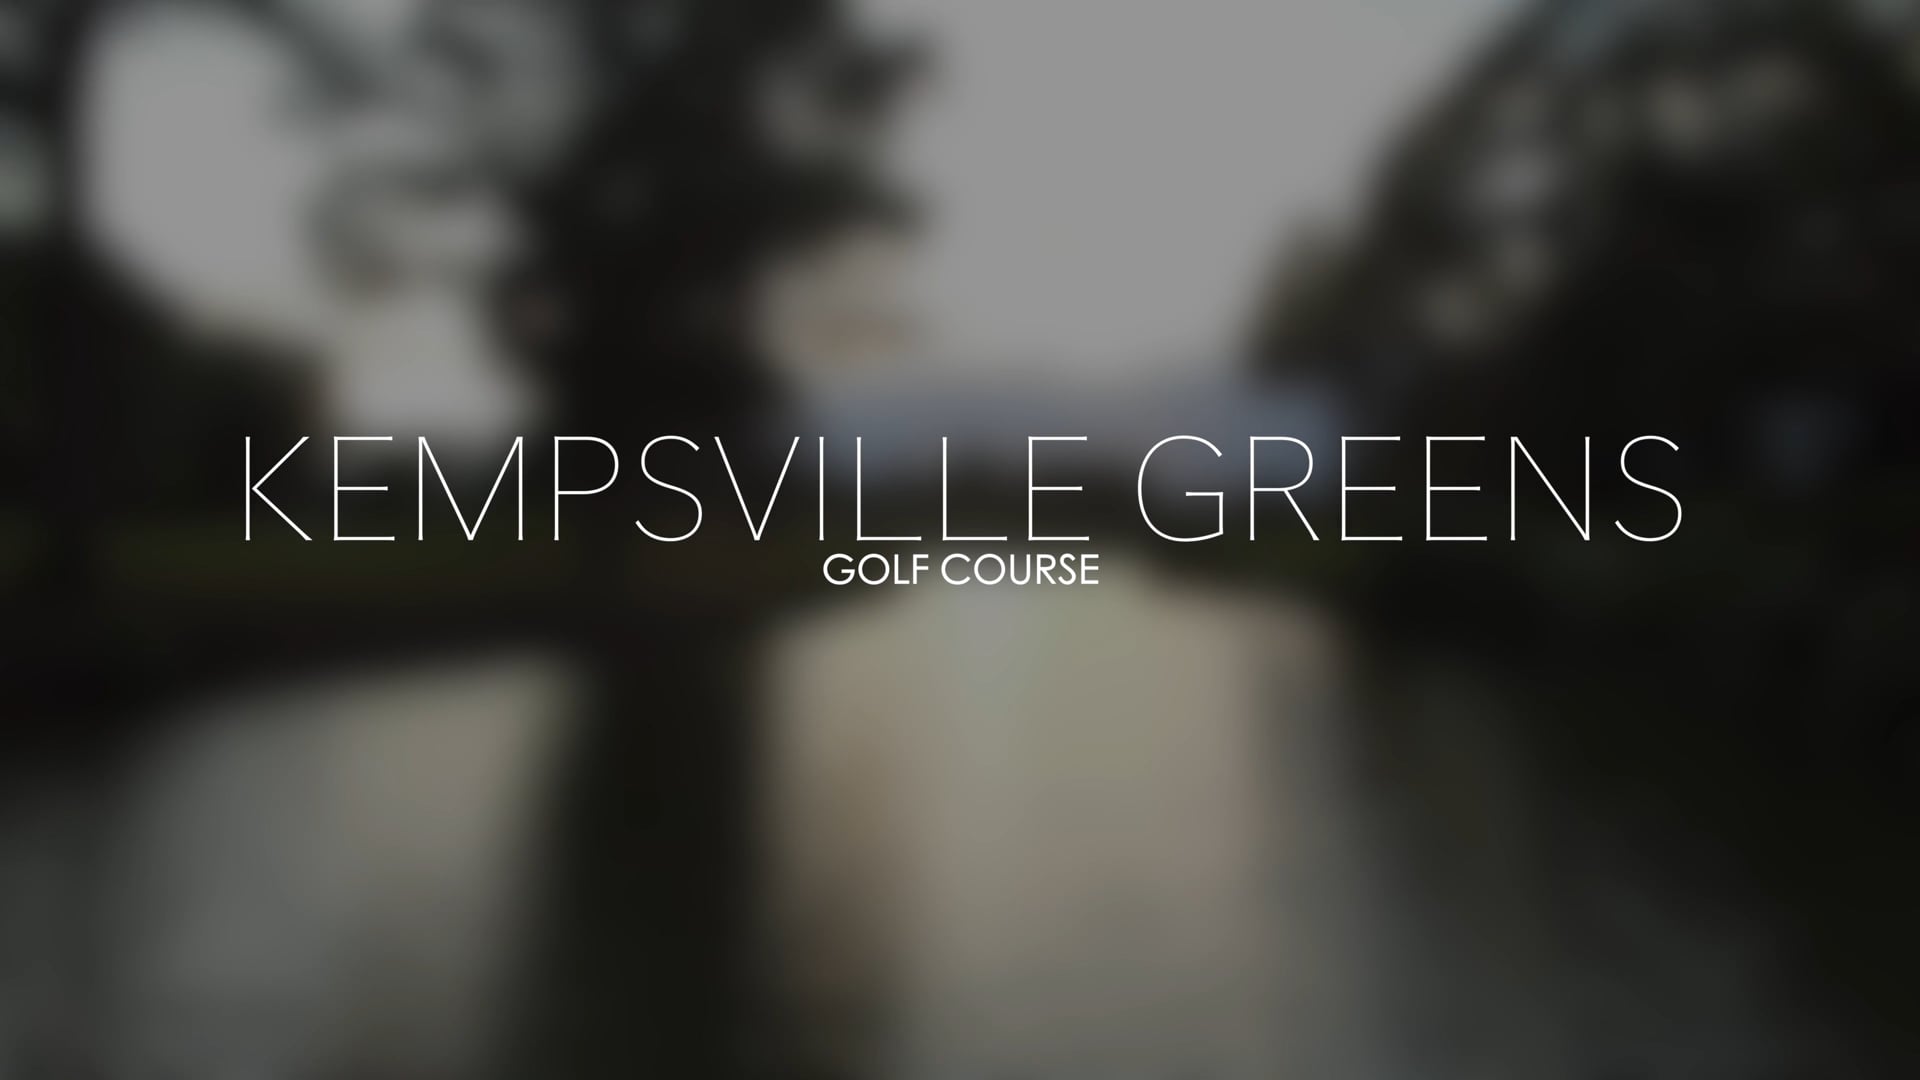 Kempsville Greens Golf Course // 4k Aerials